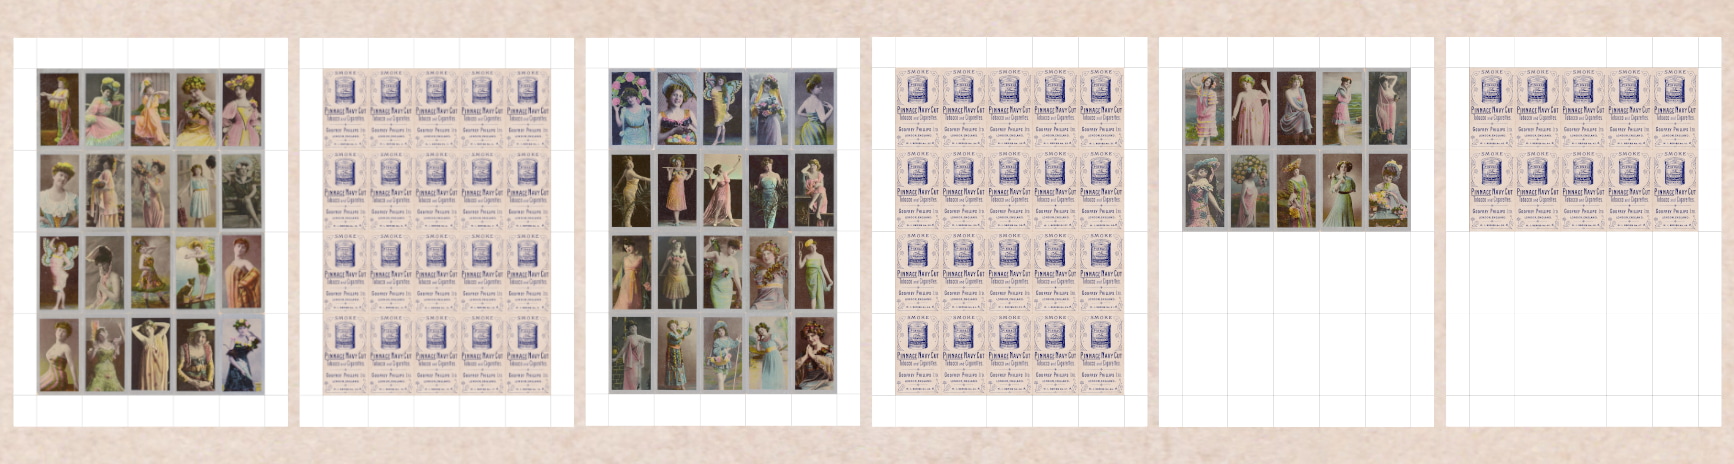 Print banner, Godfrey Phillips Ltd. cigarette cards, Beautiful Women, W. I. Series.